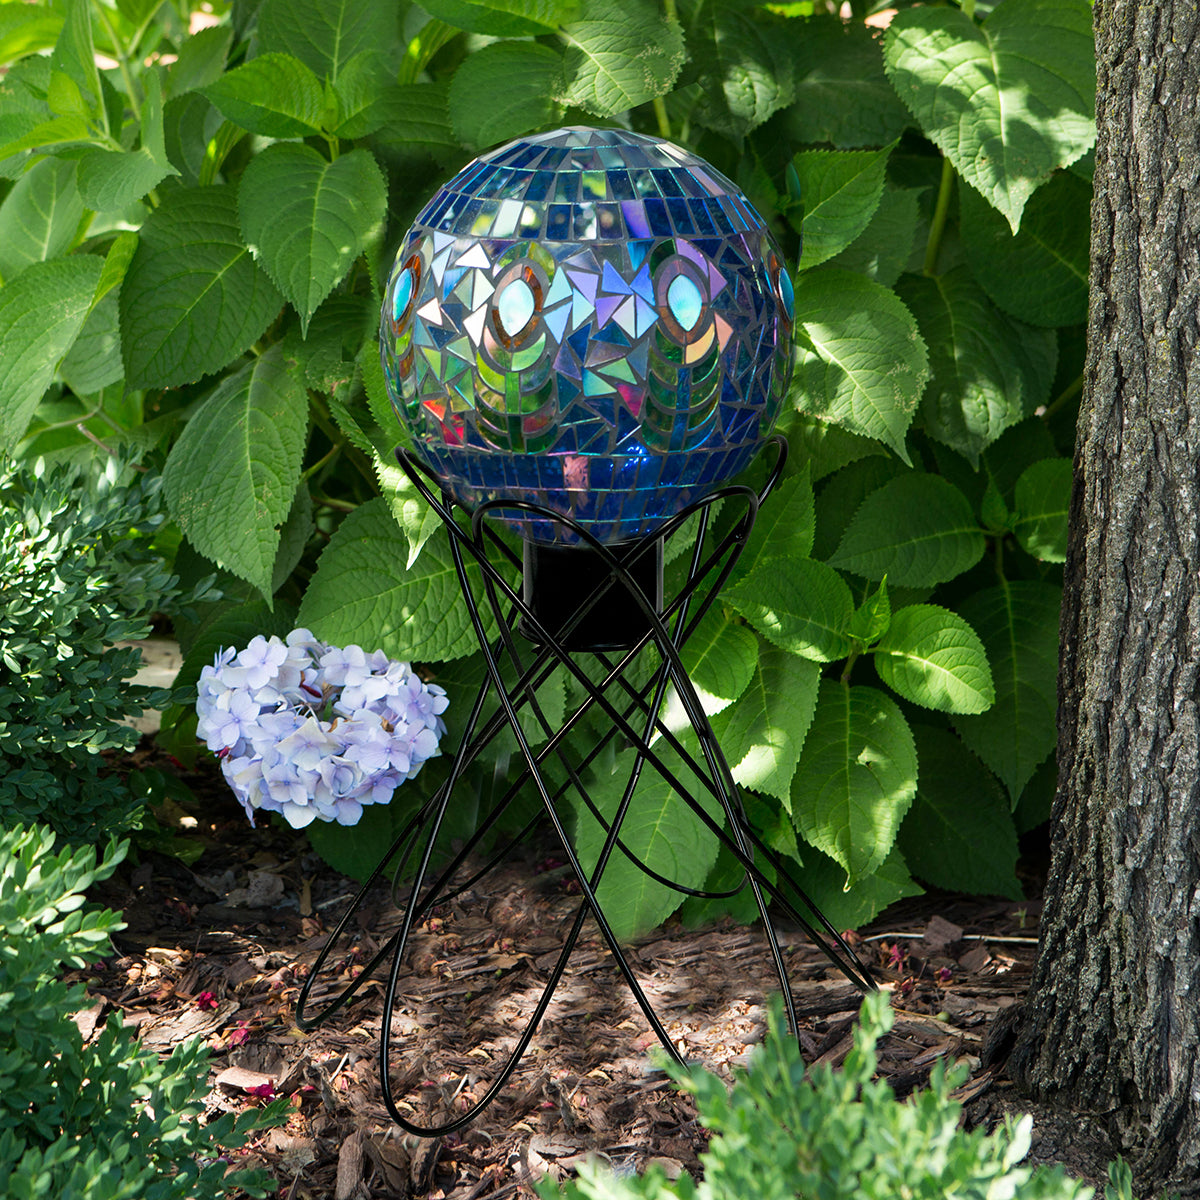 10" Translucent Peacock Mosaic Globe